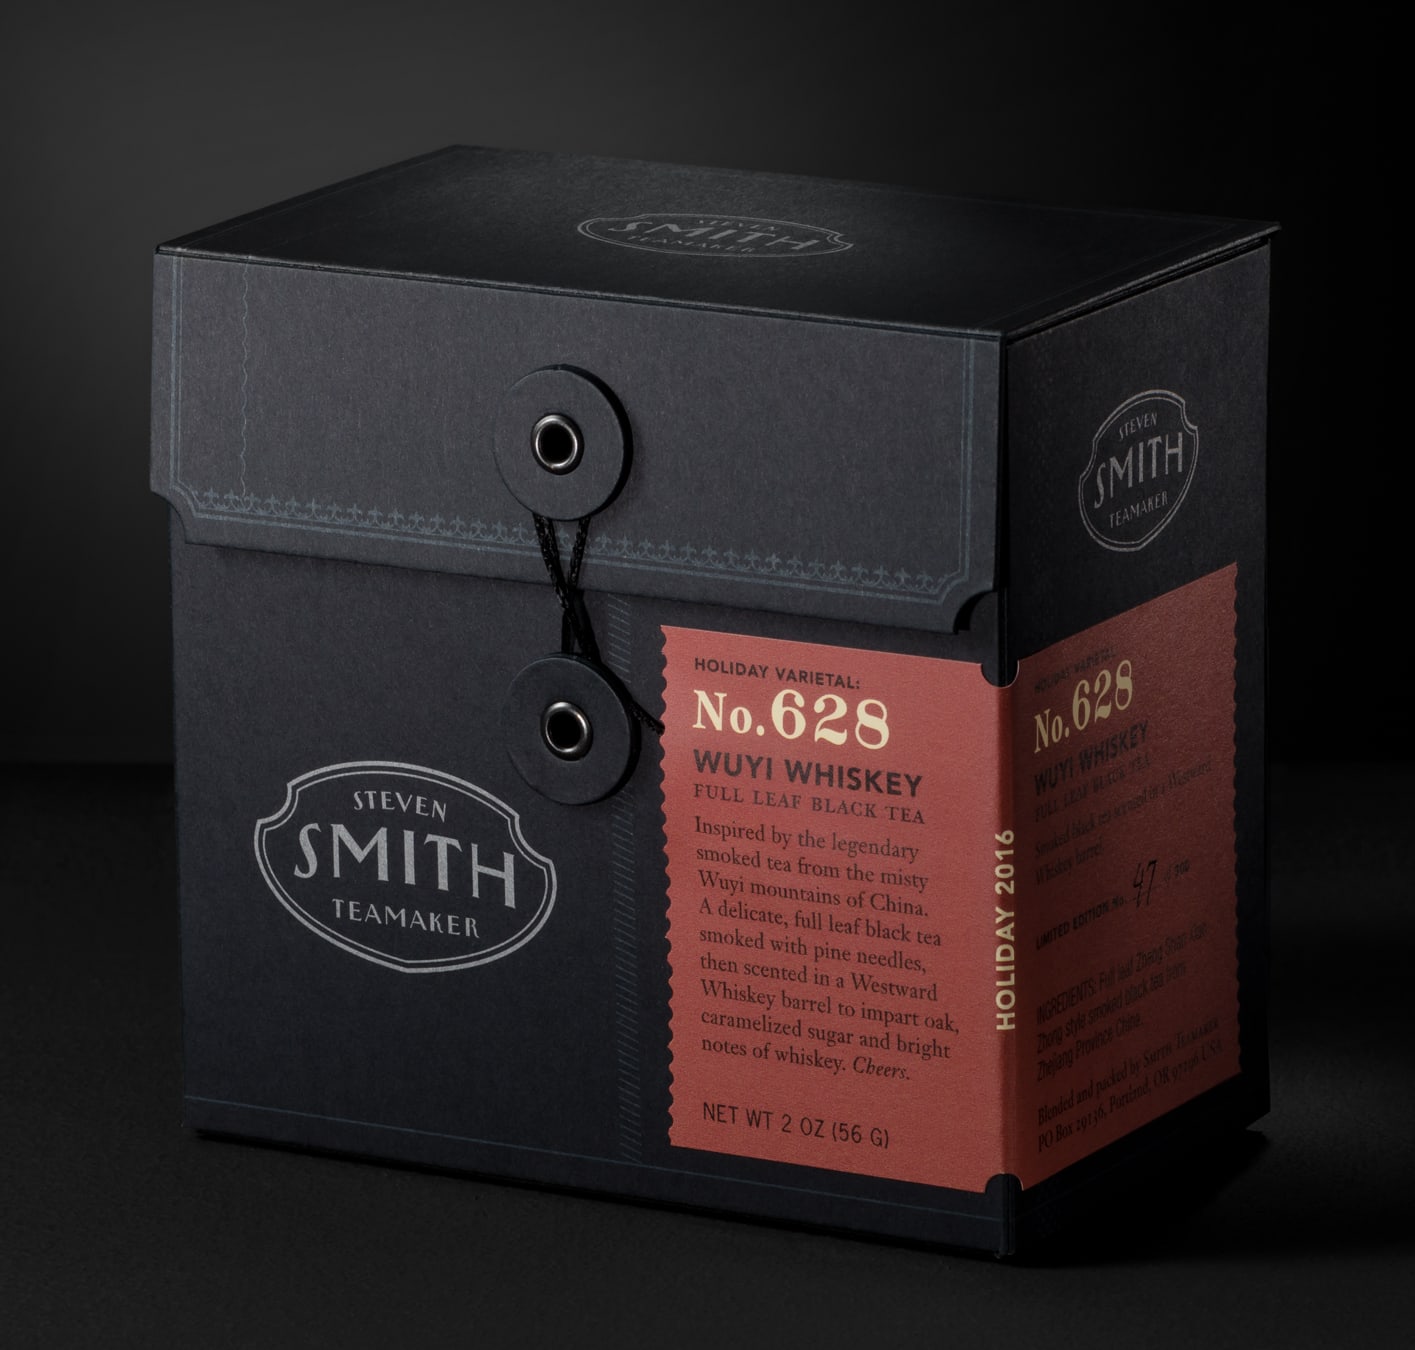 Steven Smith Teamaker package design black sting tie box